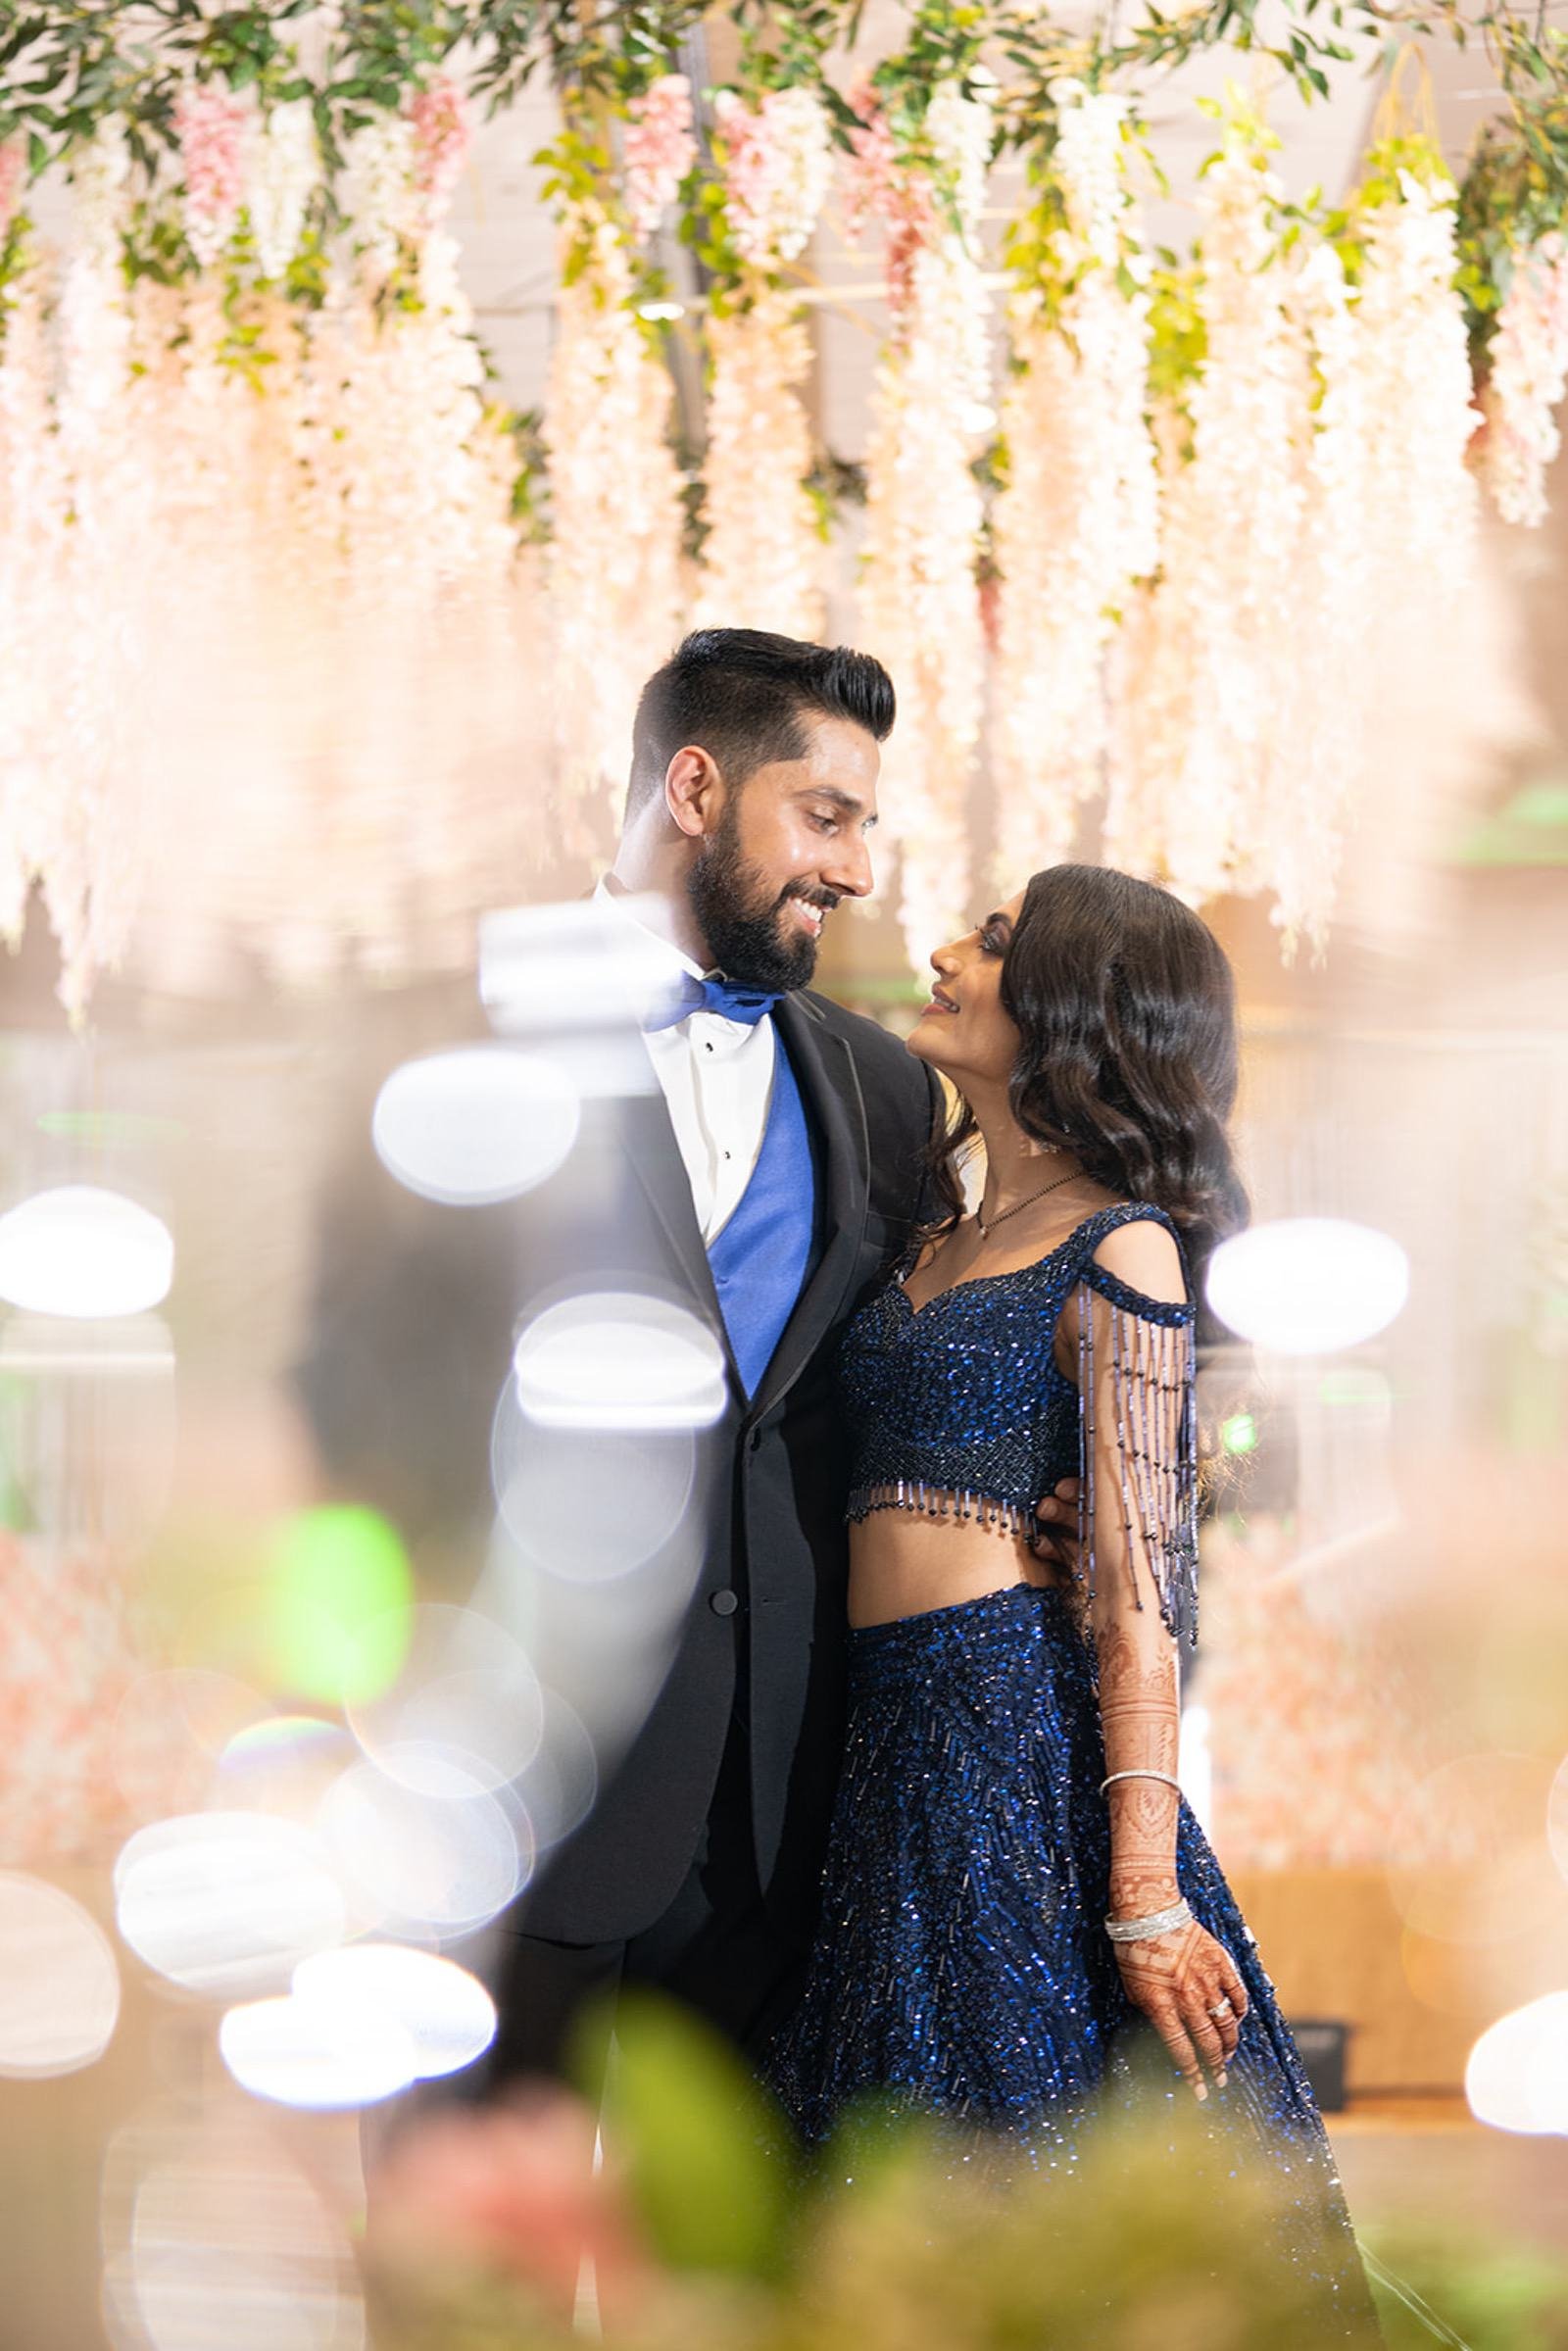 LCW - Chicago South Asian Weddings - Sonu and Daman - Reception Decor Portraits-31.jpg